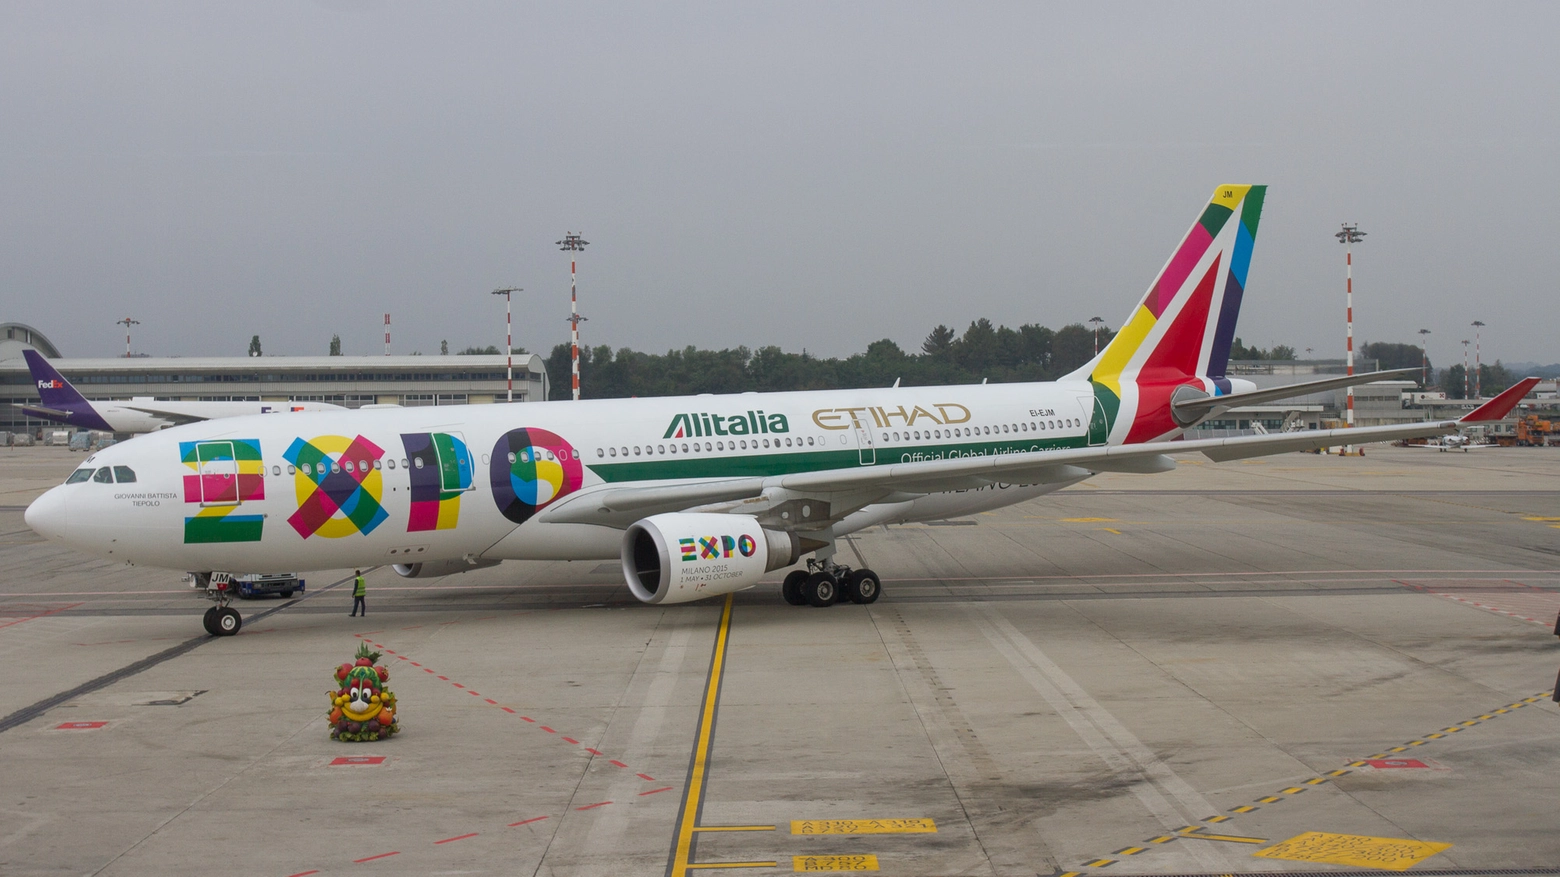 L'aereo Alitalia con la livrea Expo (Newpress)